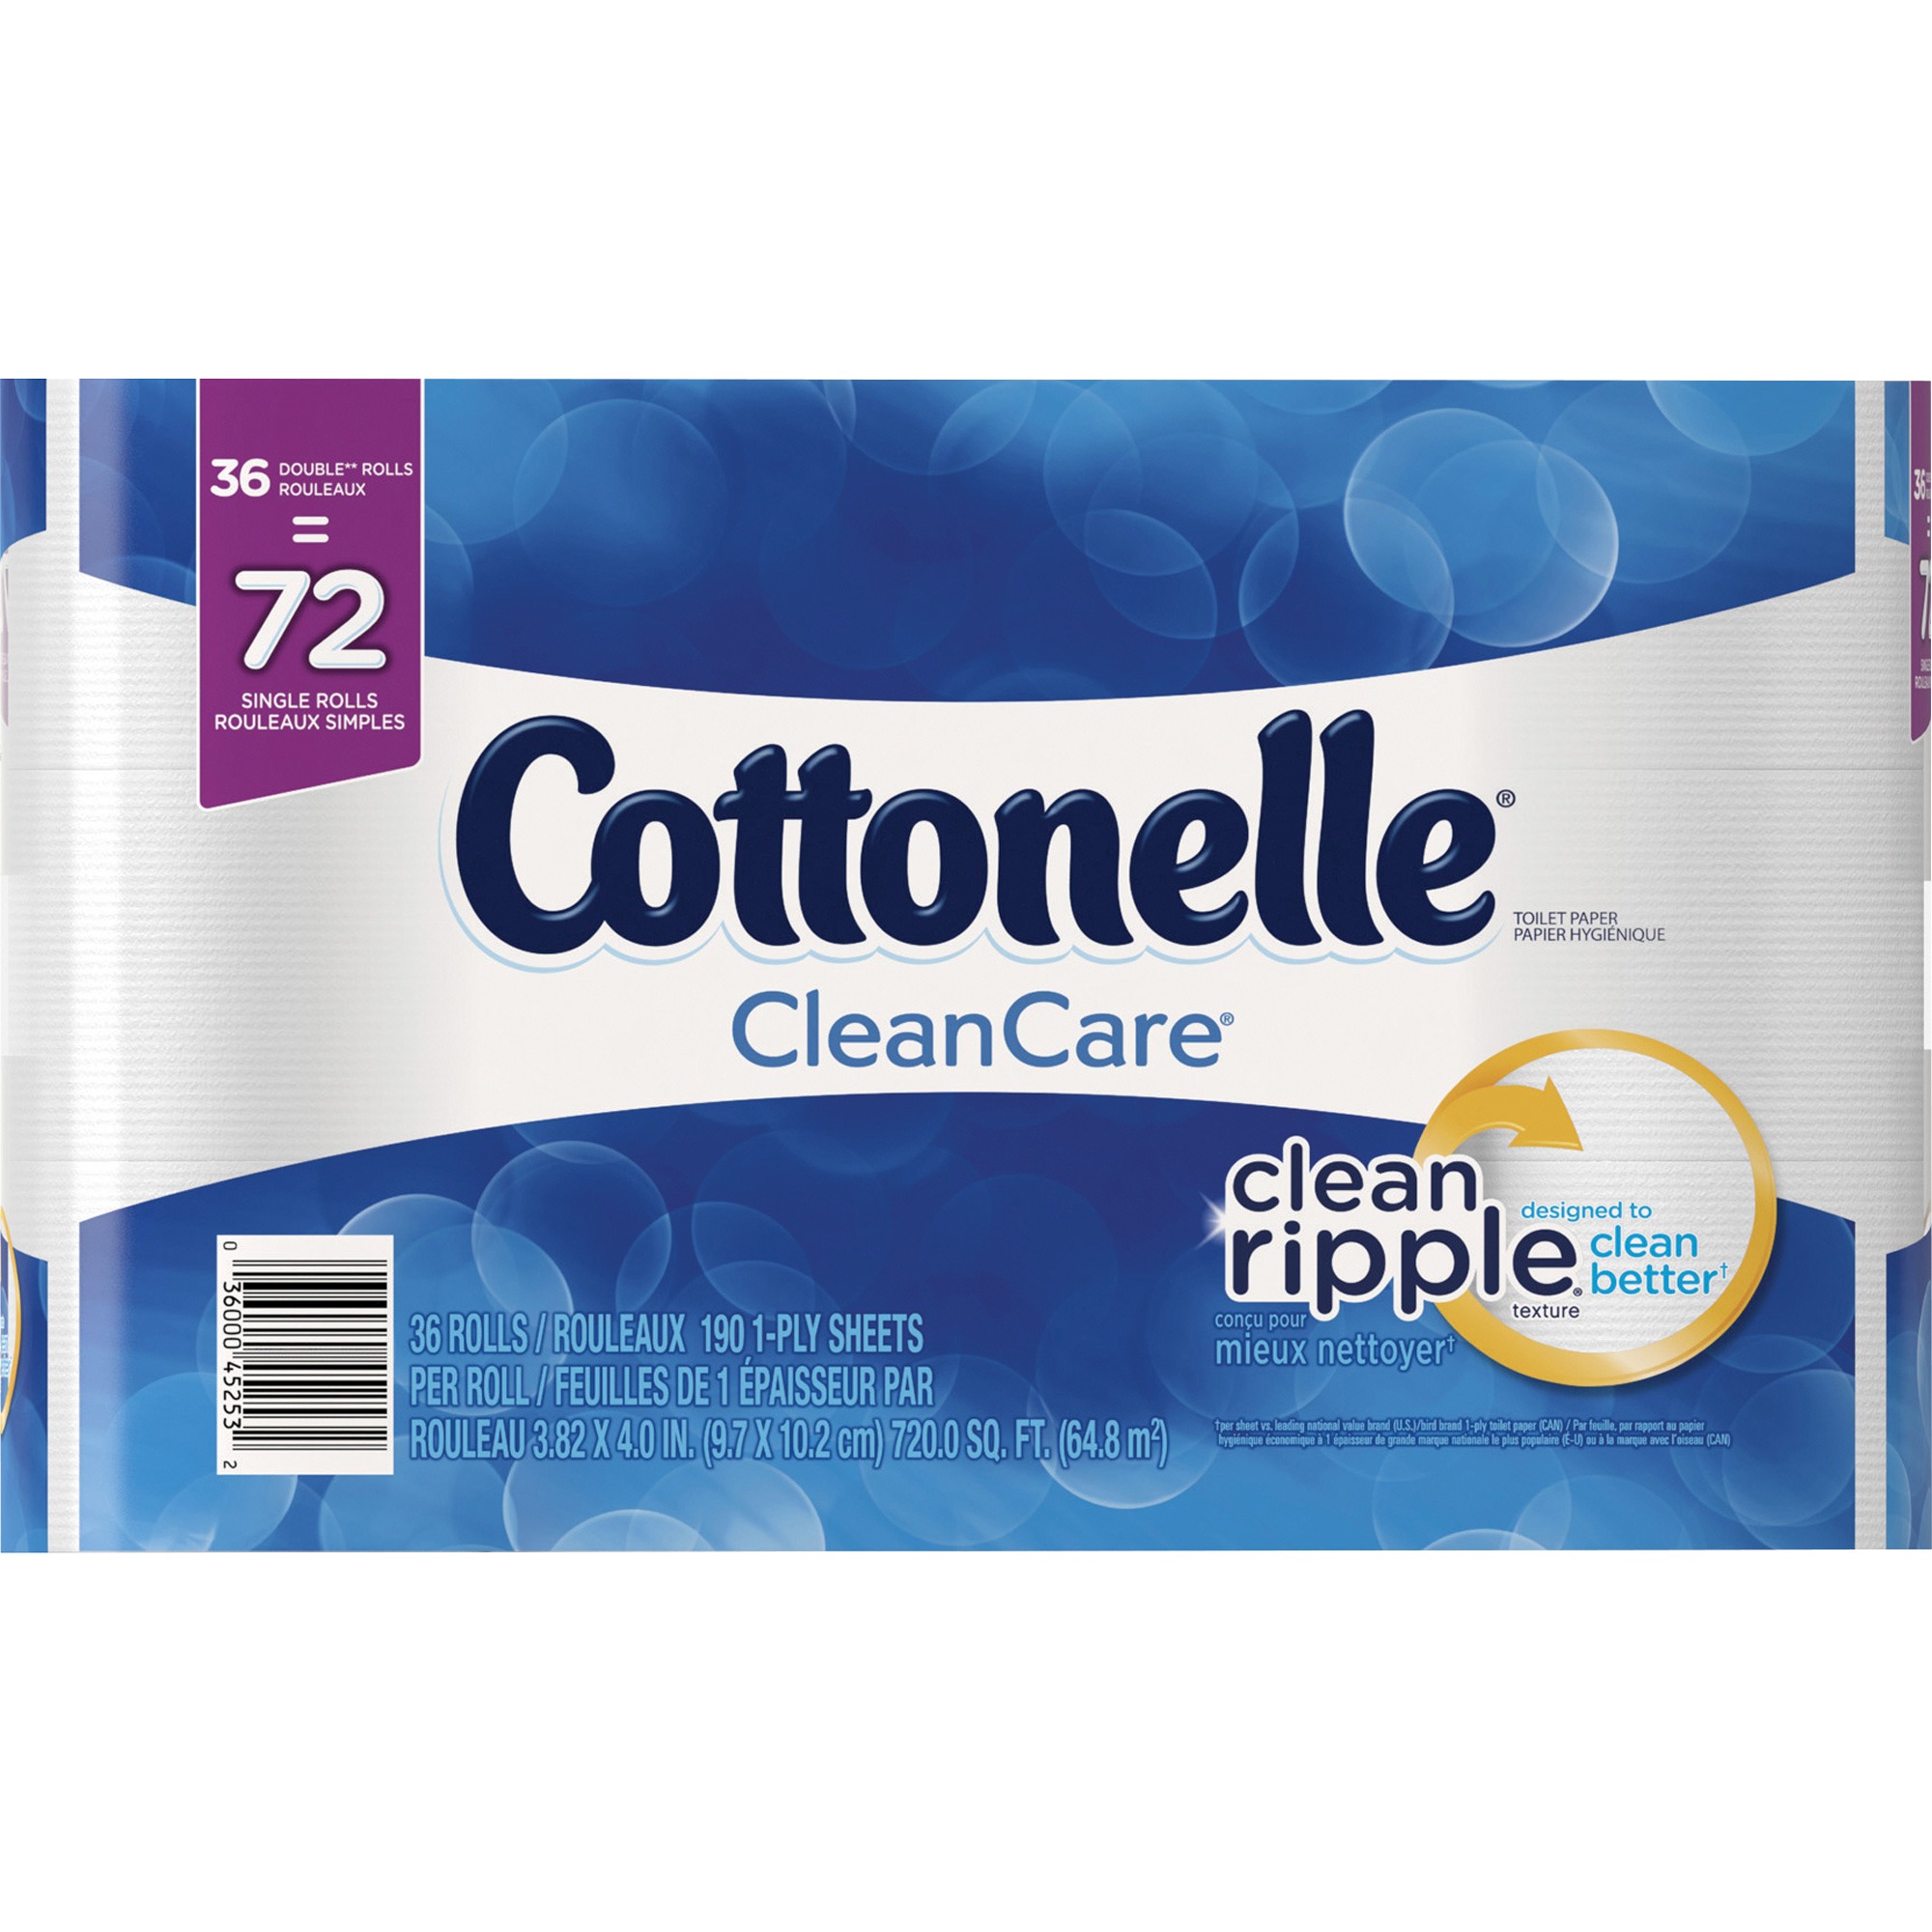 Cottonelle Clean Care Toilet Paper, 36 Double Rolls - image 1 of 7